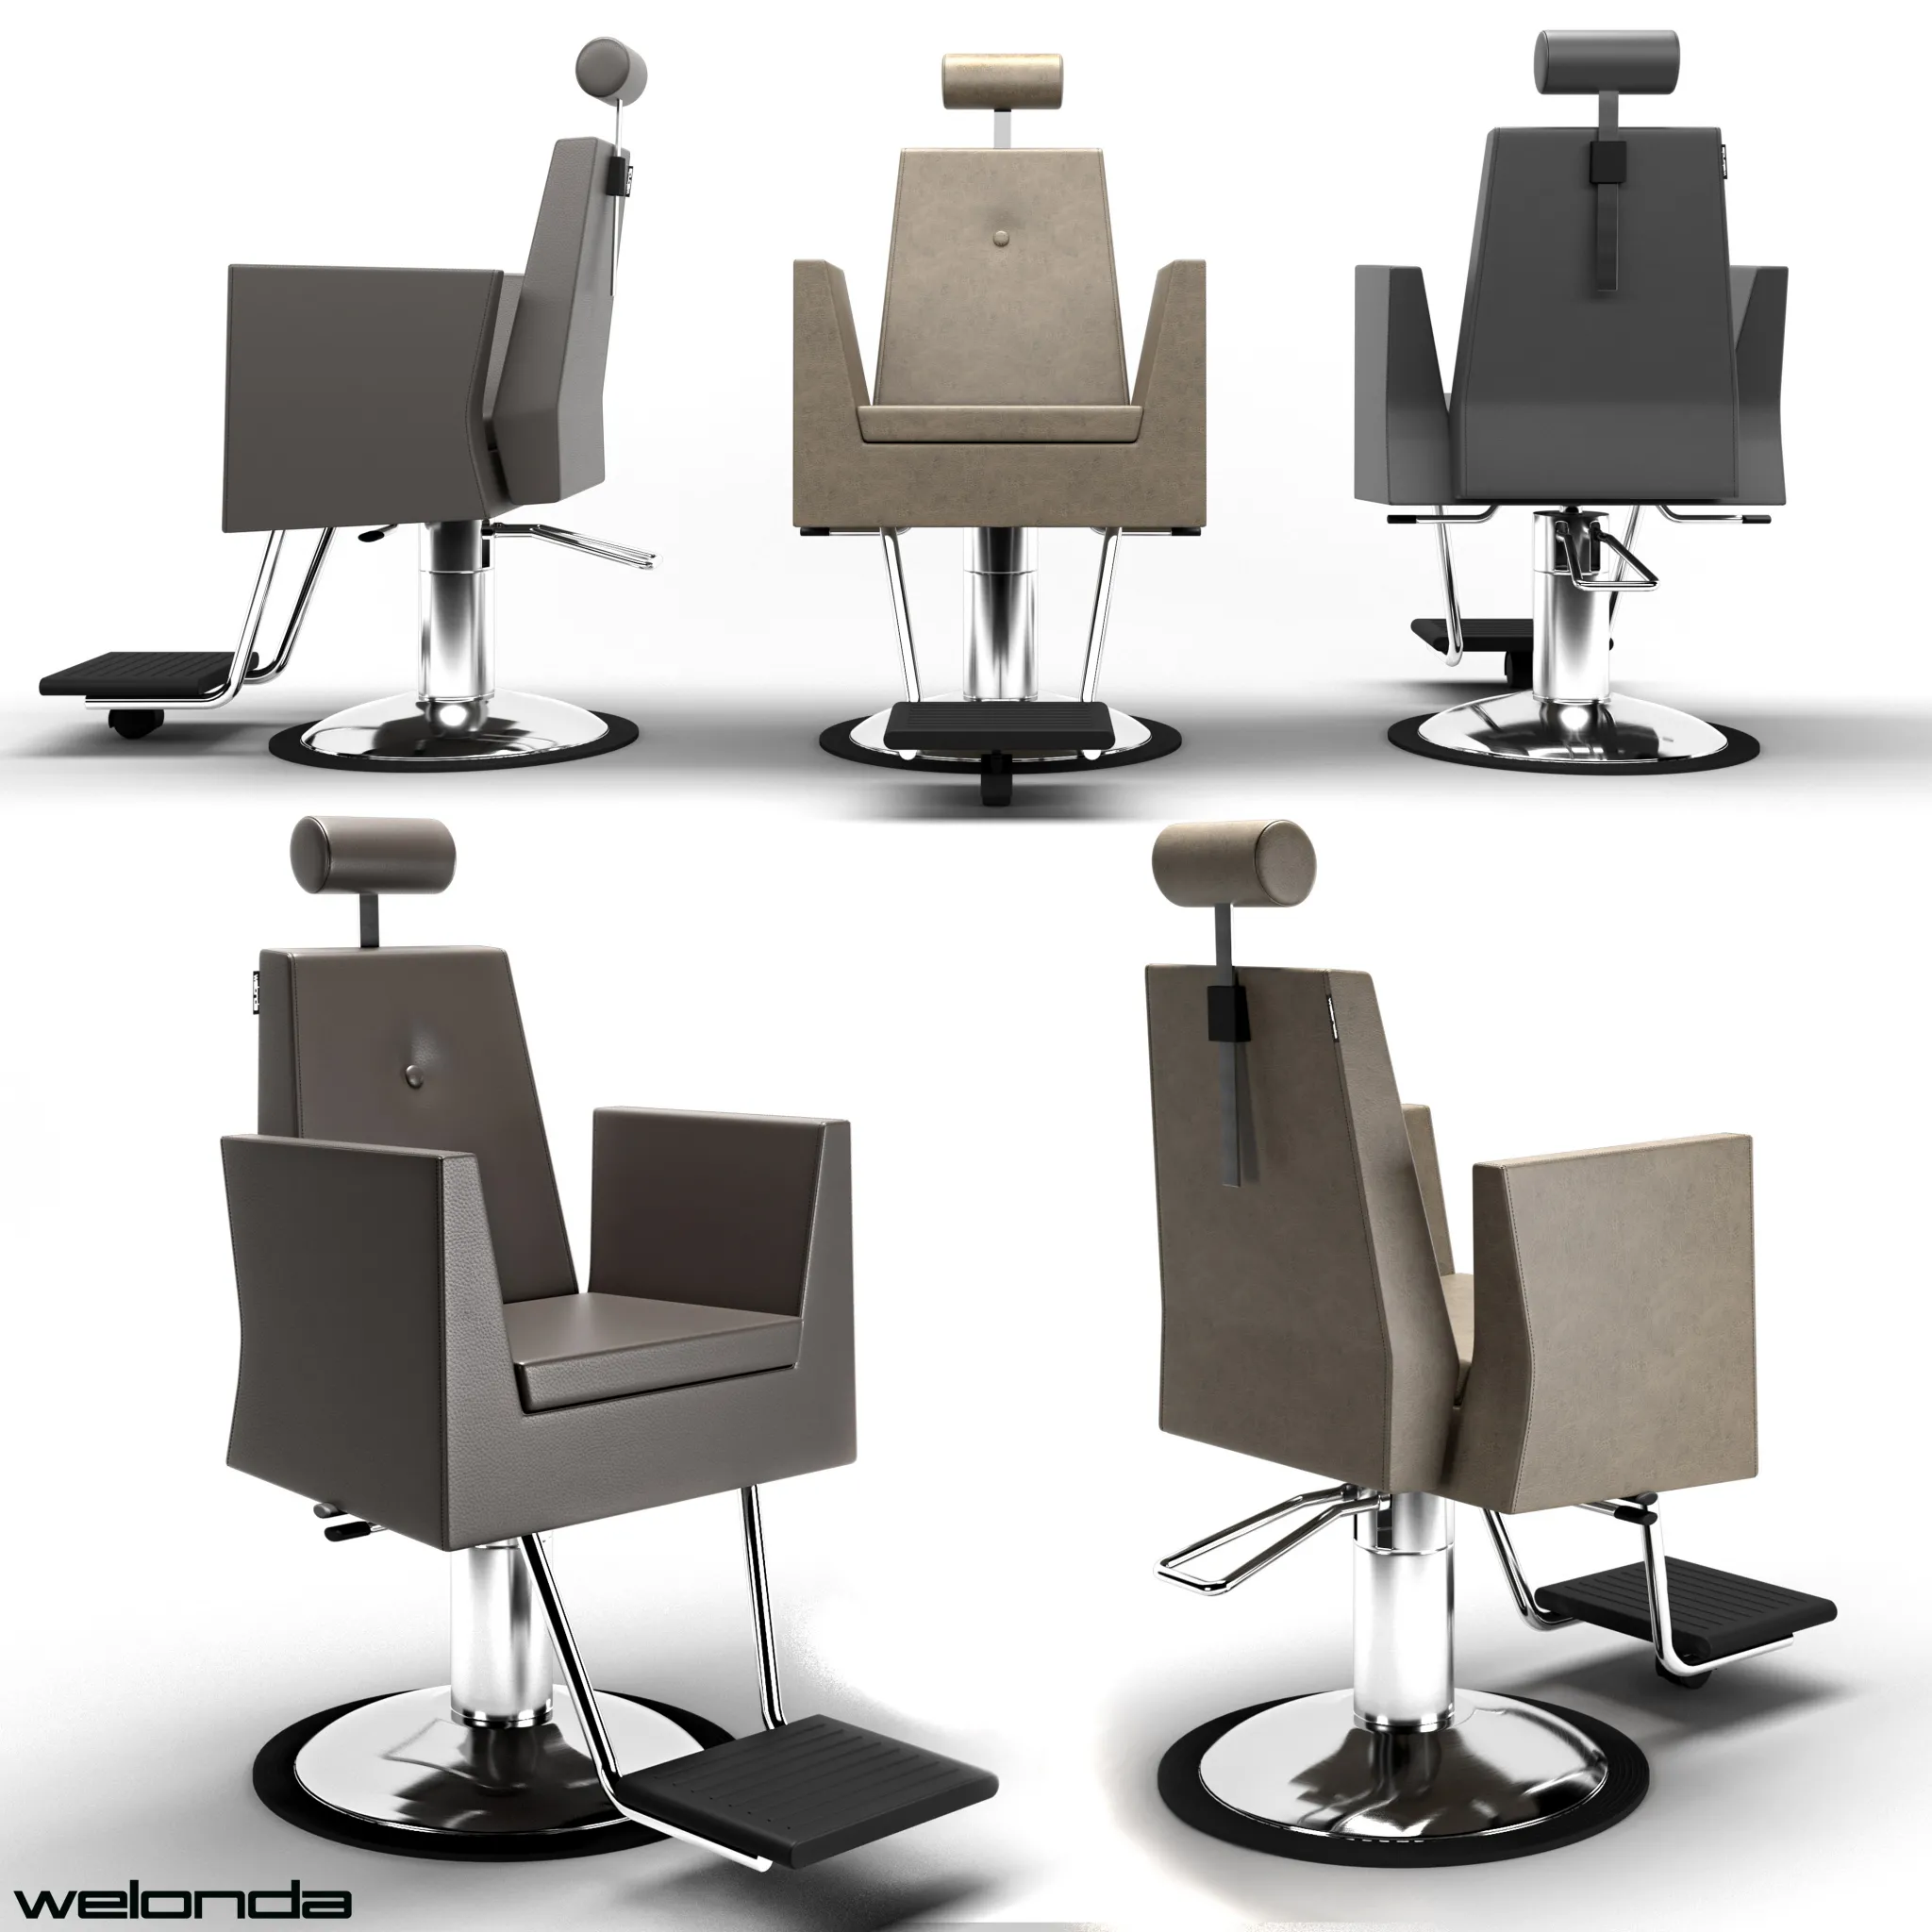 Welonda B-Chiled barber chair – 4273